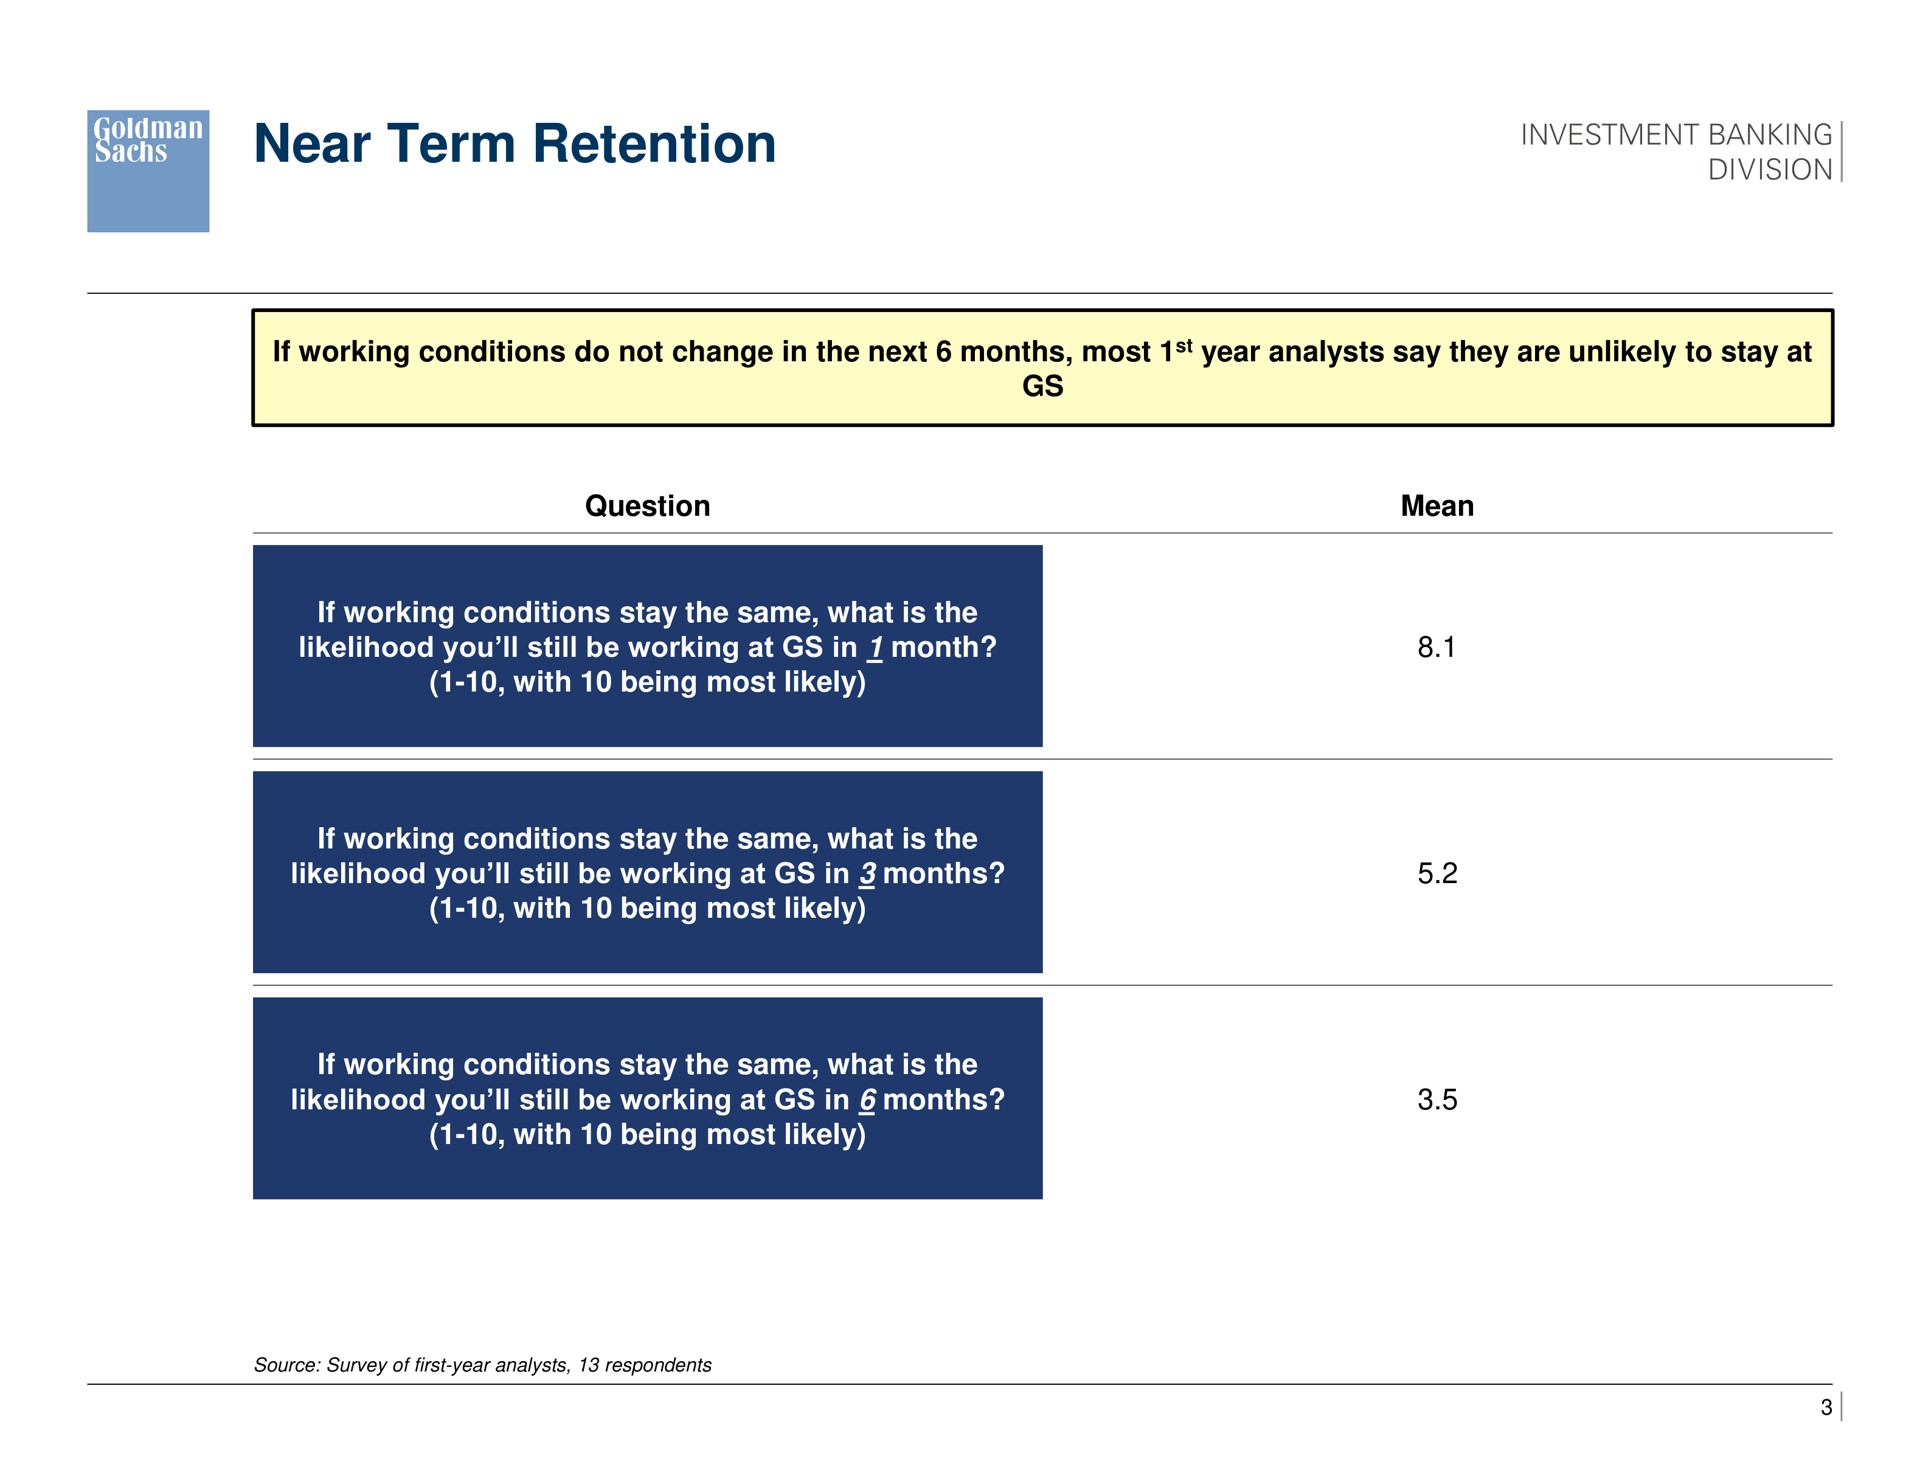 near term retention division | Goldman Sachs